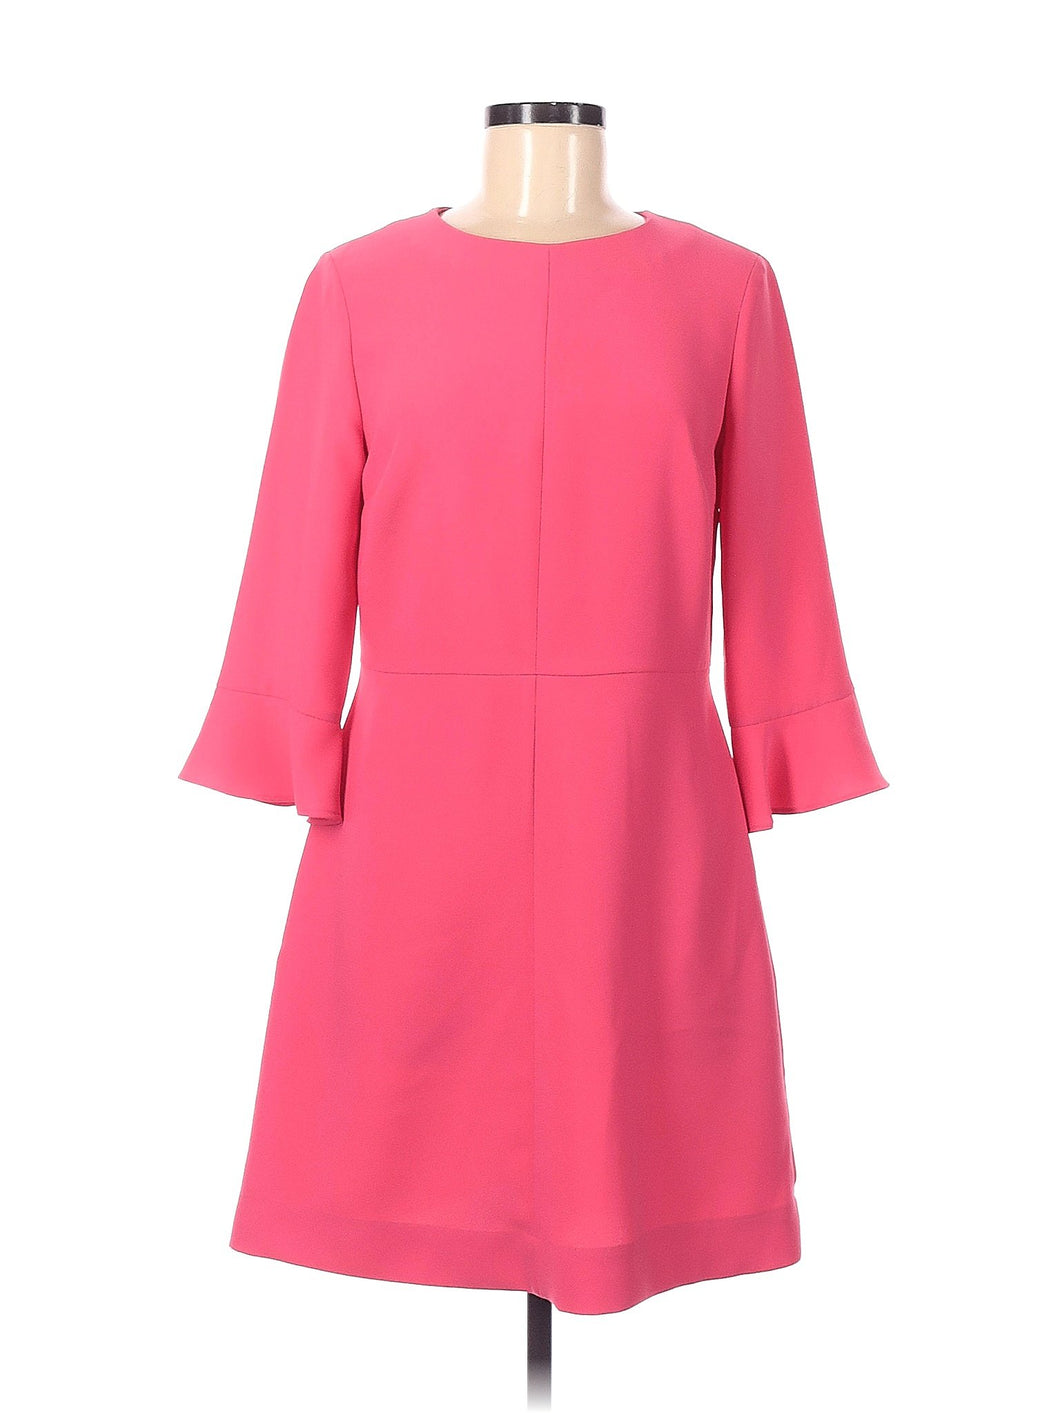 Banana Republic 3/4 Sleeve Pink Dress - Size 2